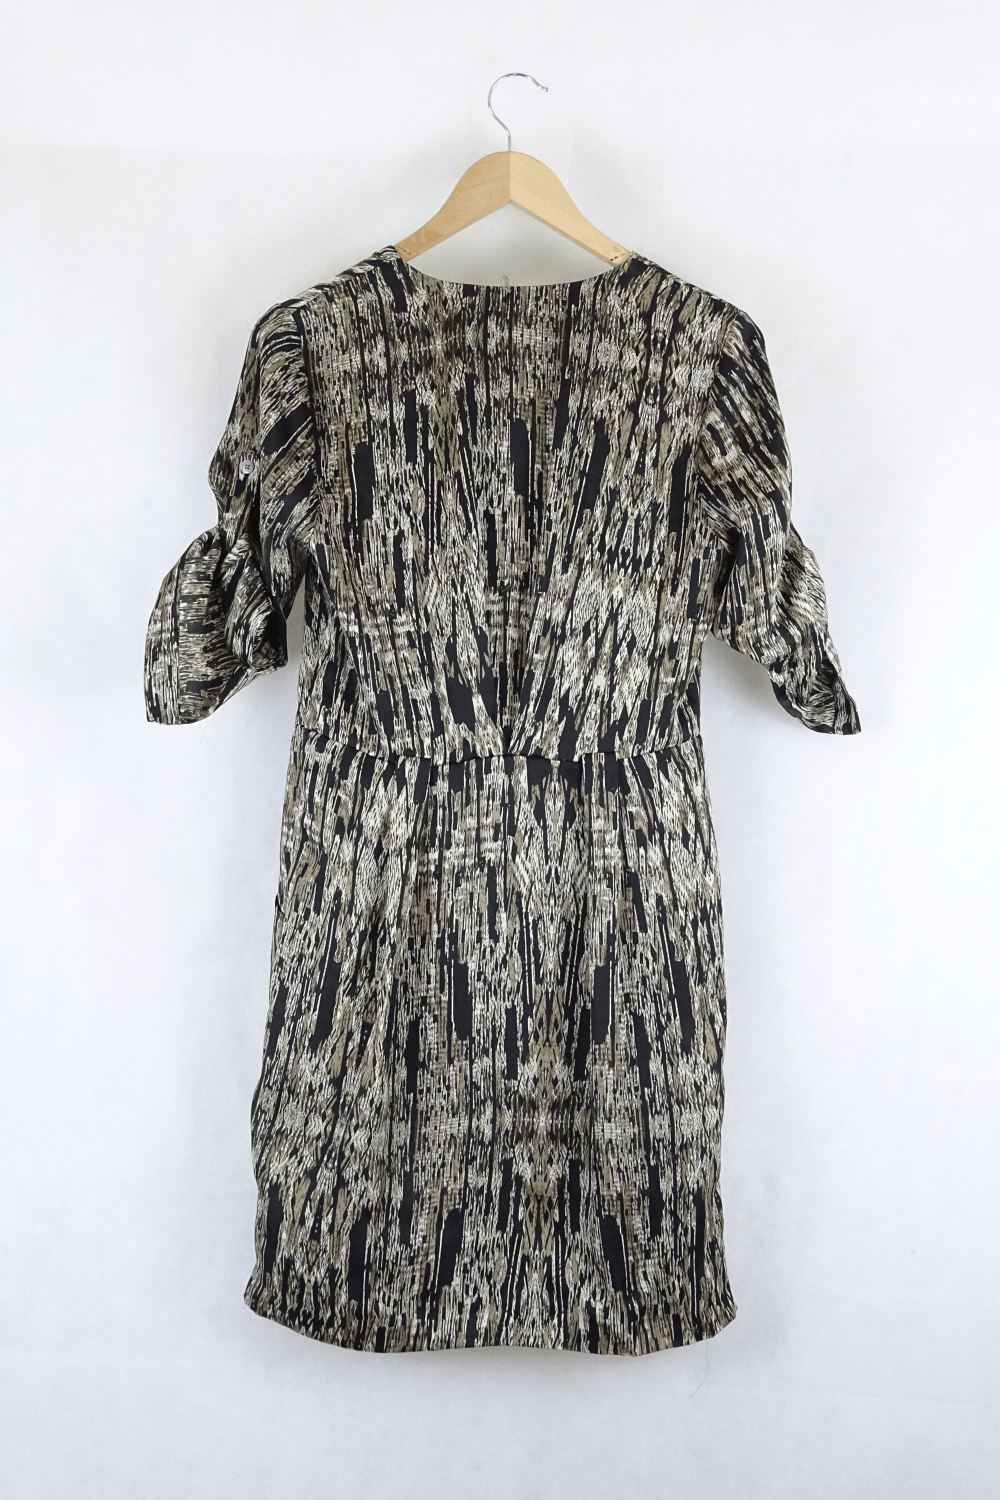 Karen Millen Brown Print Dress 12